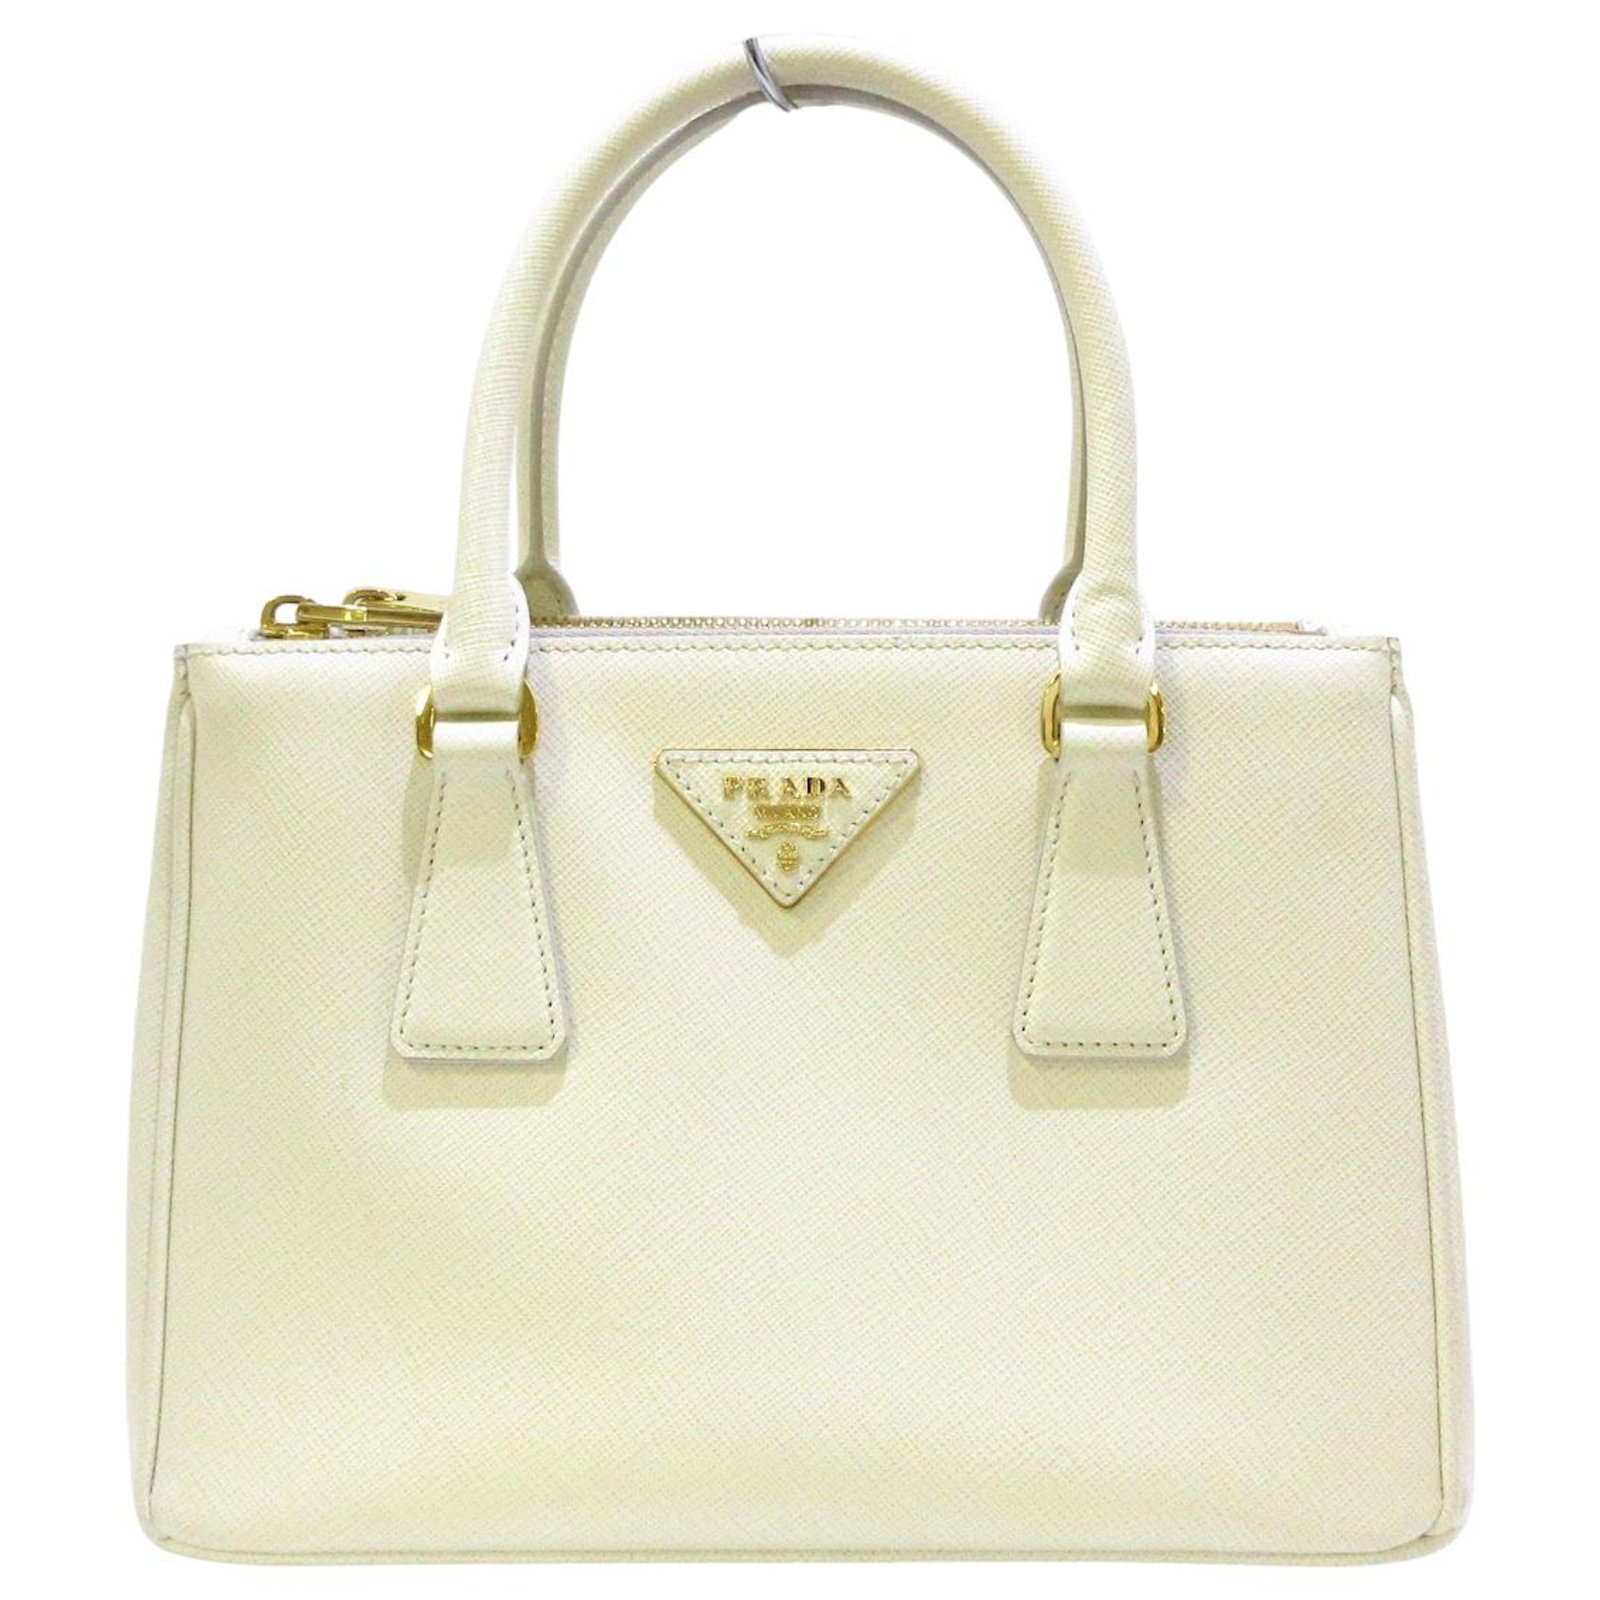 Prada Galleria Saffiano Leather Mini Bag, White, One Size